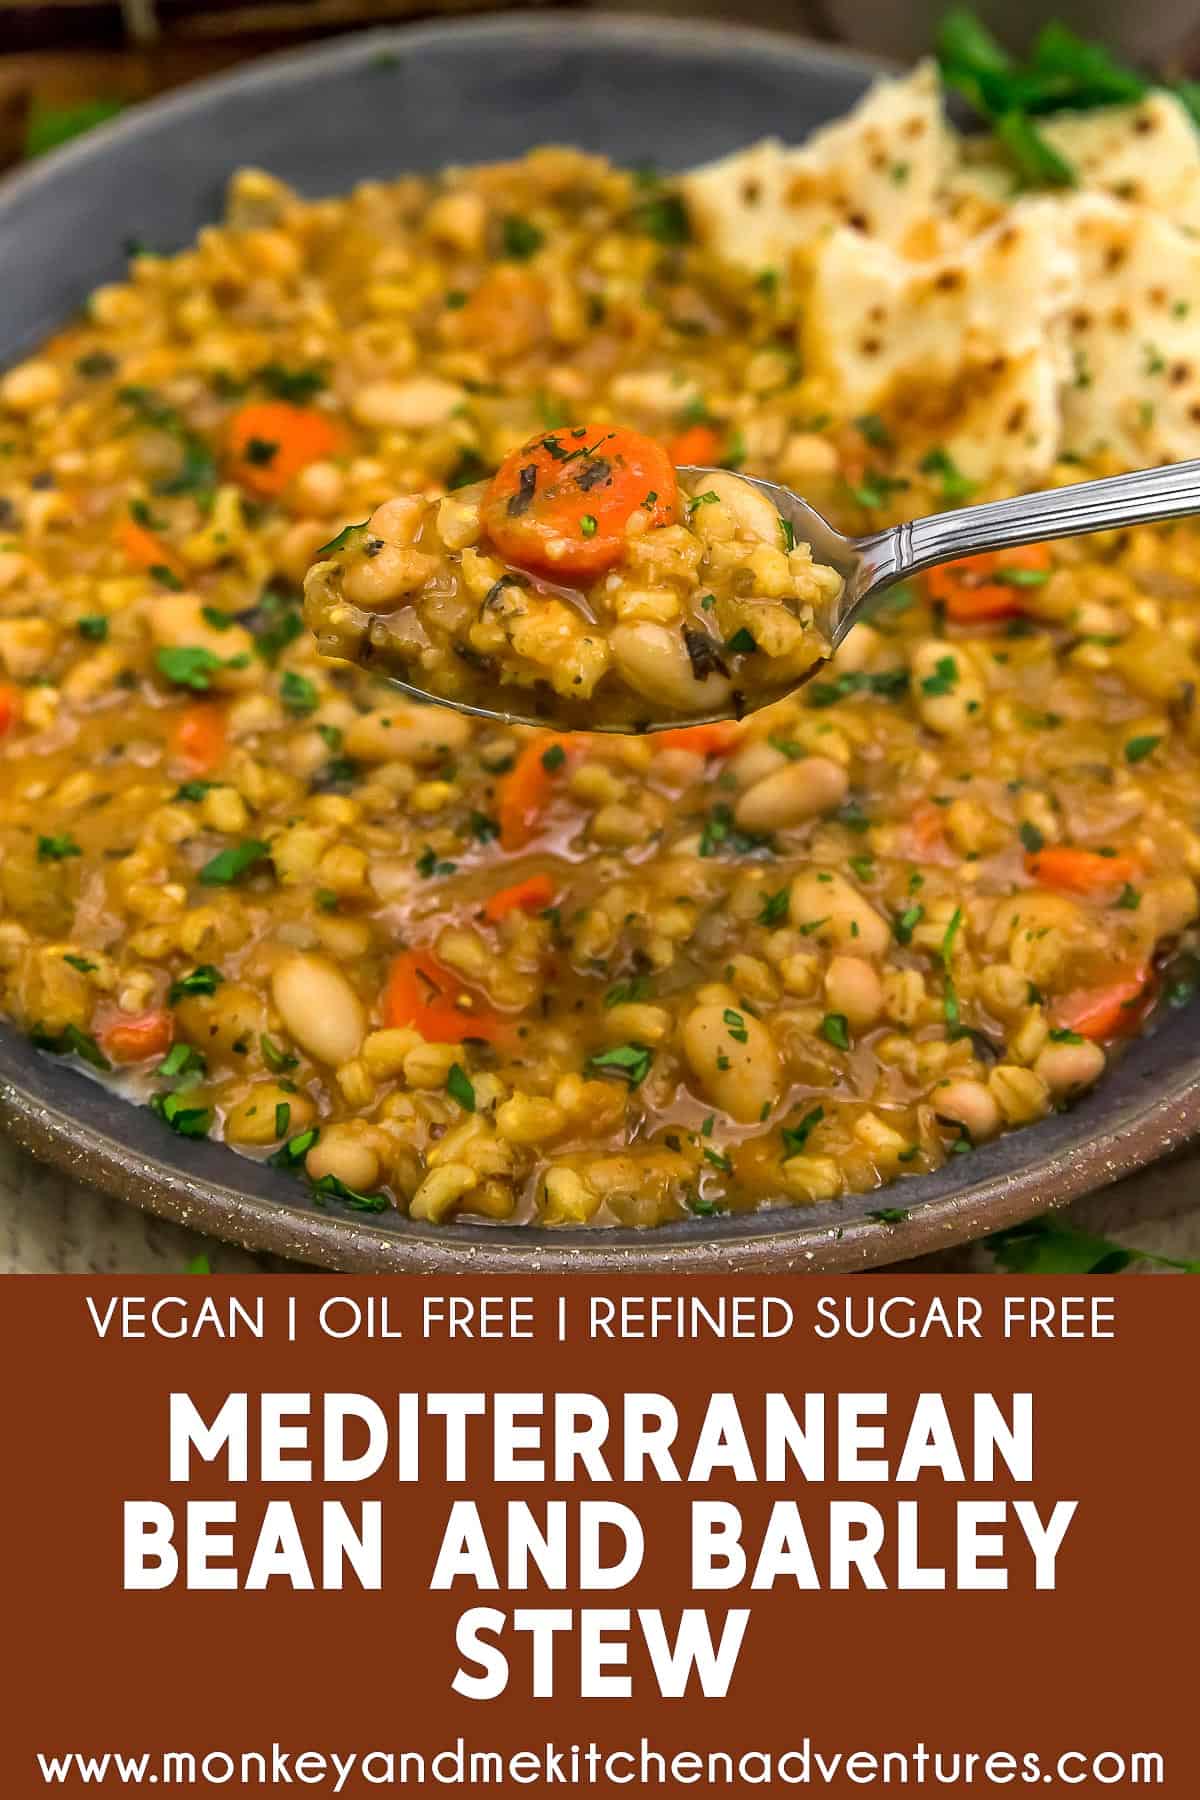 Mediterranean Bean and Barley Stew with text description